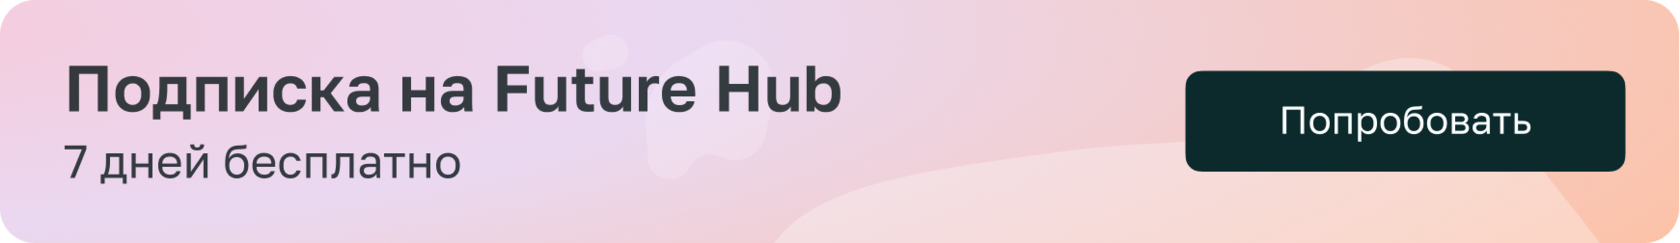 www.future-hub.io